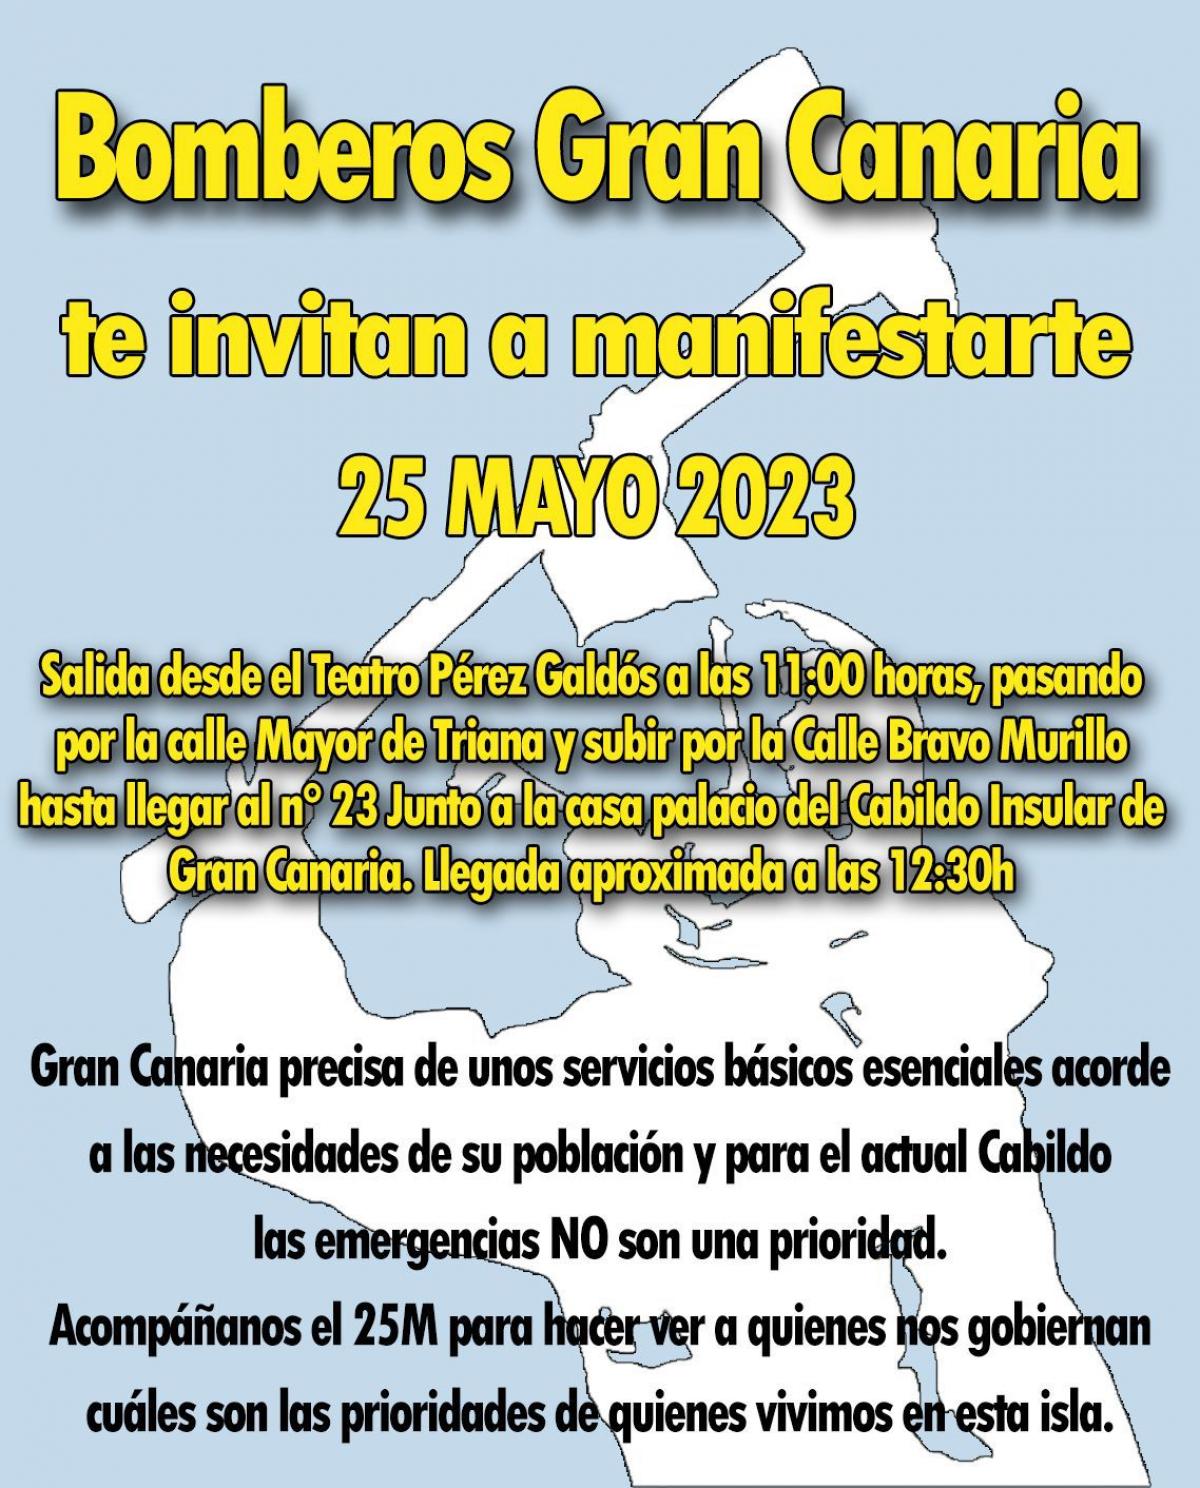 Bomberos Gran Canaria